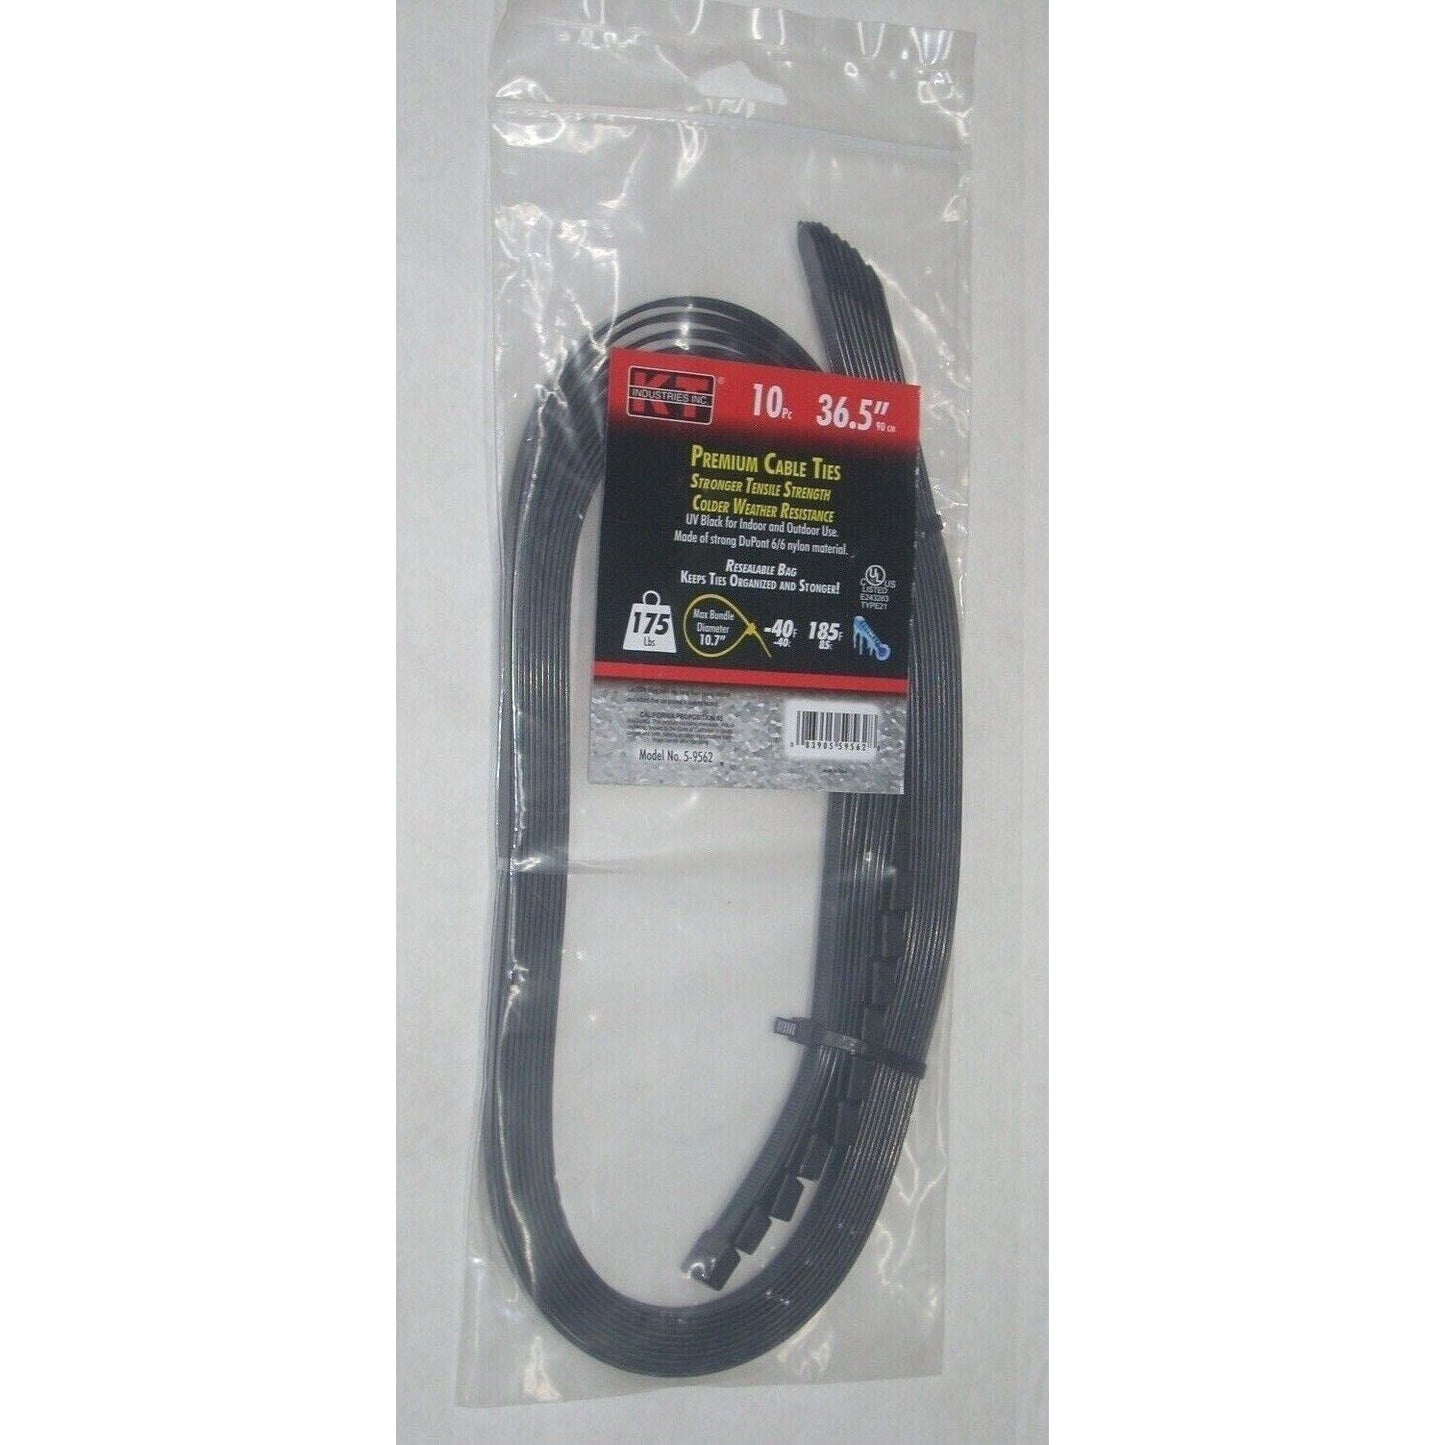 KT Industries 5-9562 Premium Black Cable Ties 36.5" Long 175 lb Cap 10 pk